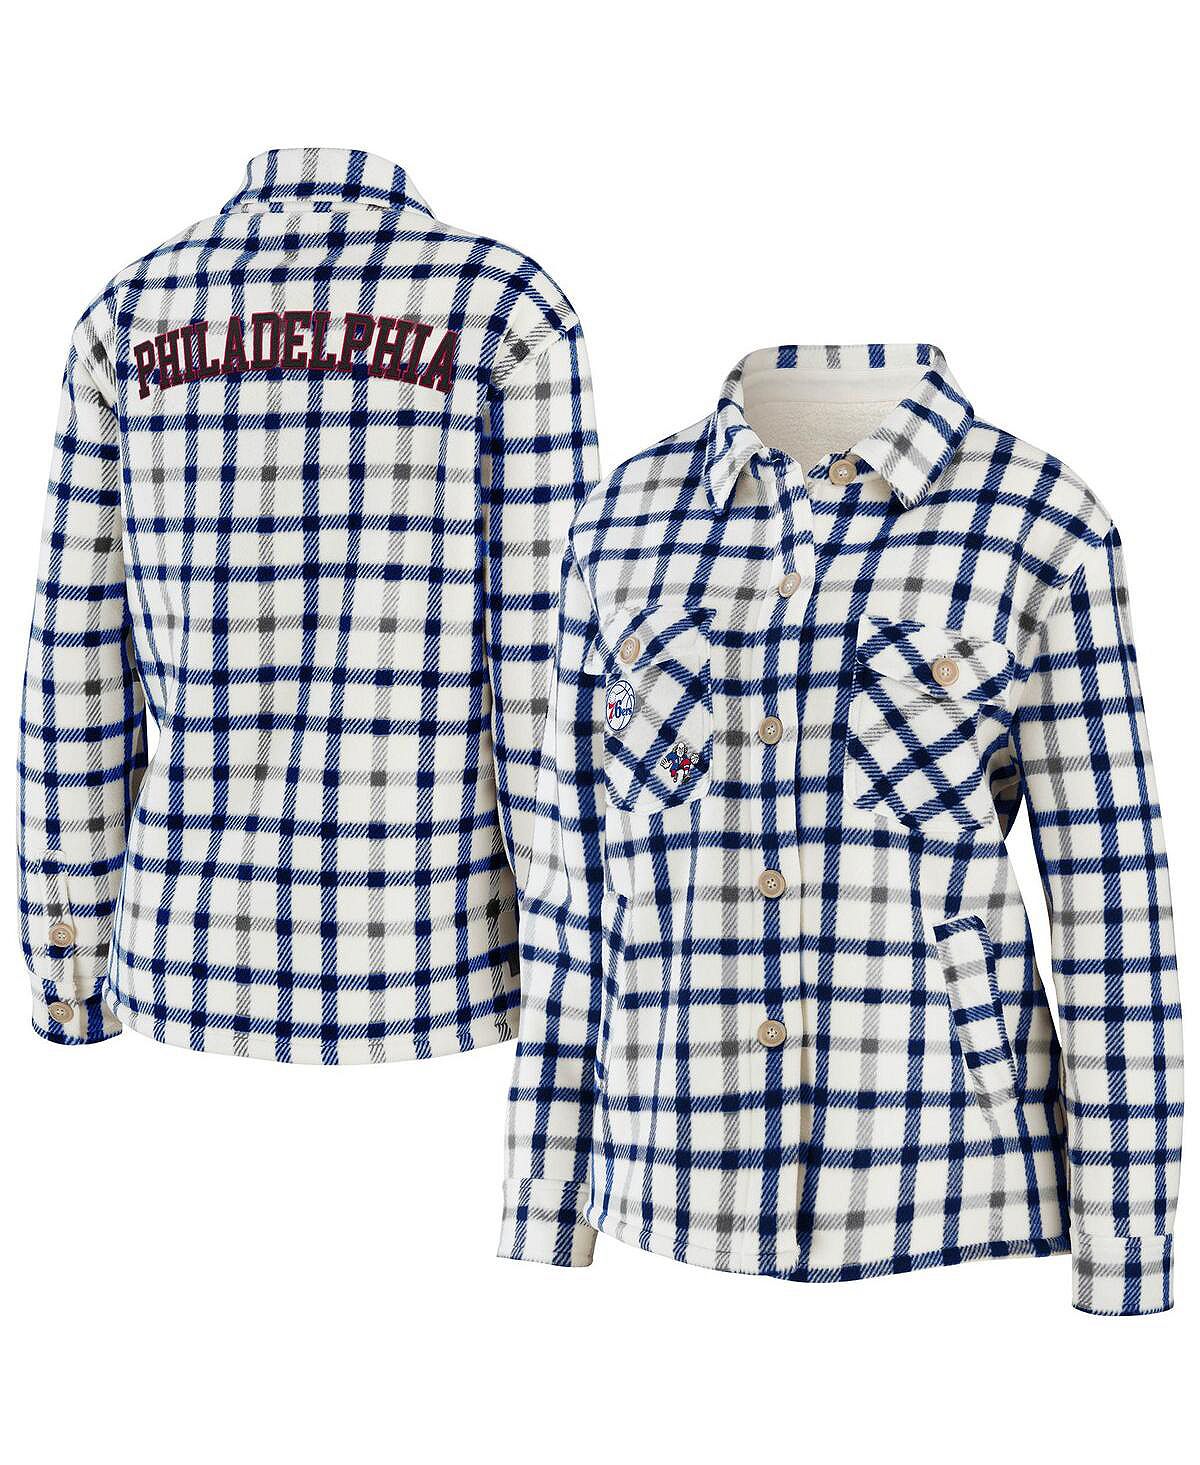 цена Женская овсяная куртка-рубашка на пуговицах в клетку Philadelphia 76ers WEAR by Erin Andrews